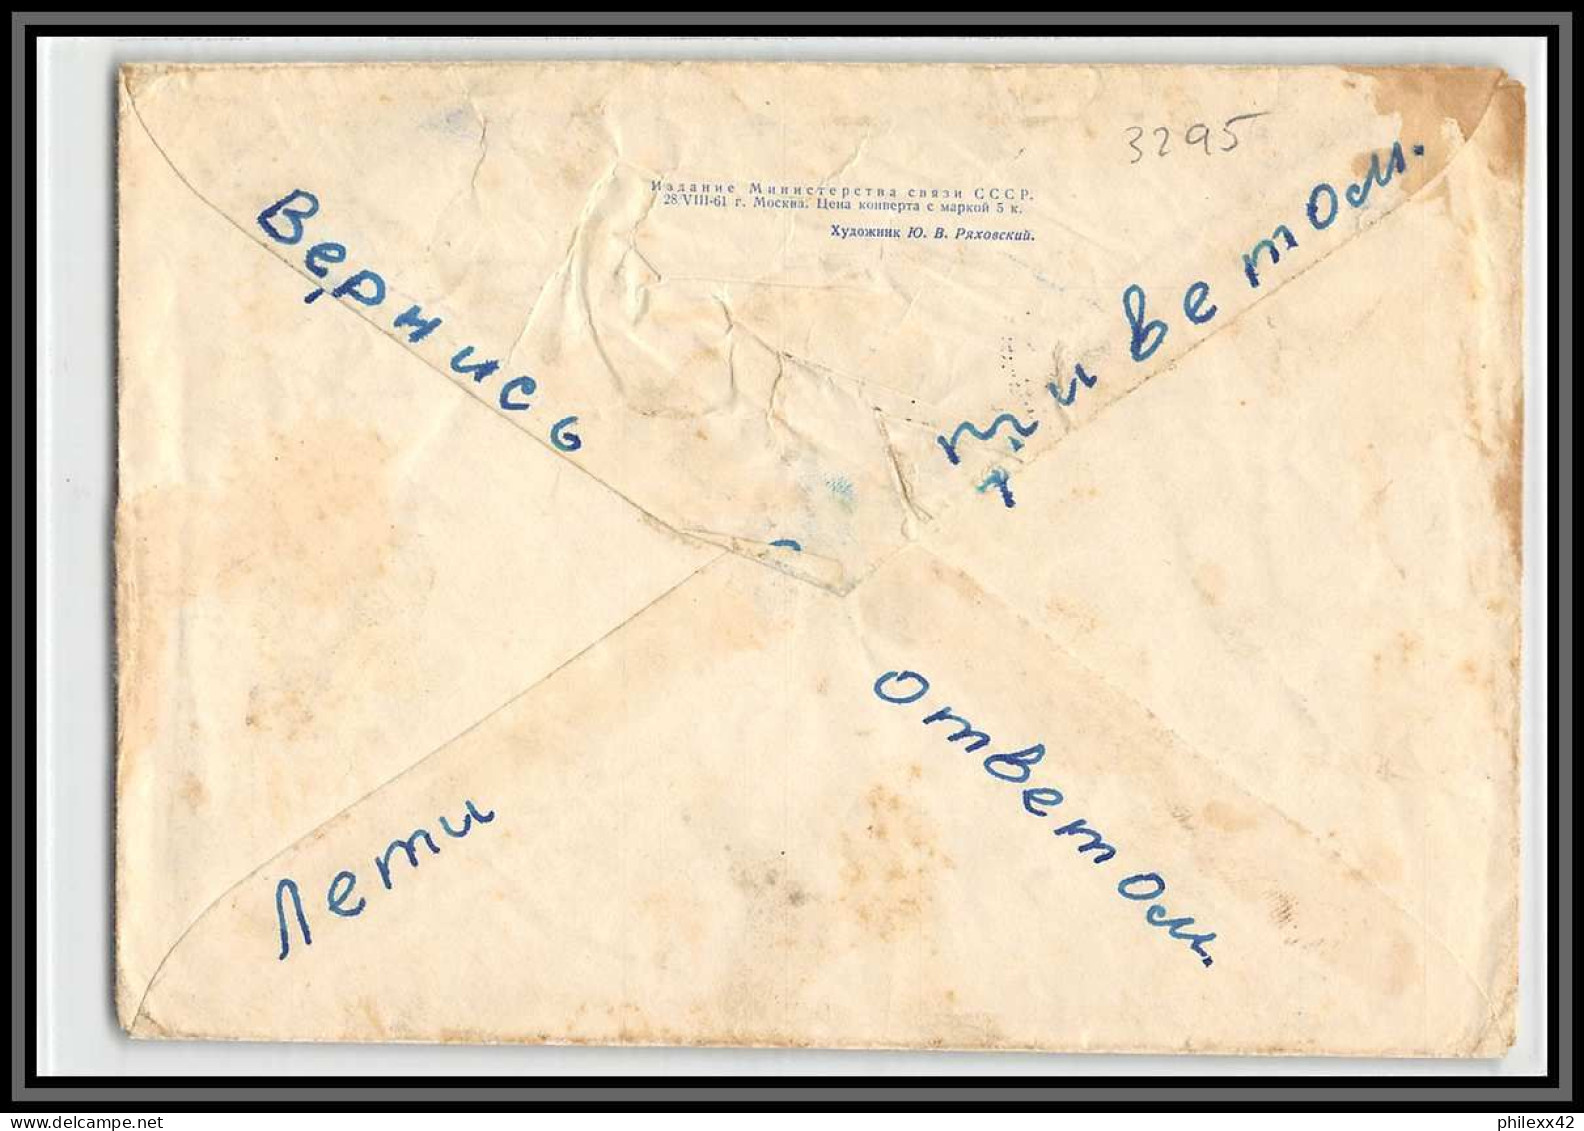 3295 Espace (space) Entier Postal Stationery Russie (Russia Urss USSR) 11/12/1961 - UdSSR